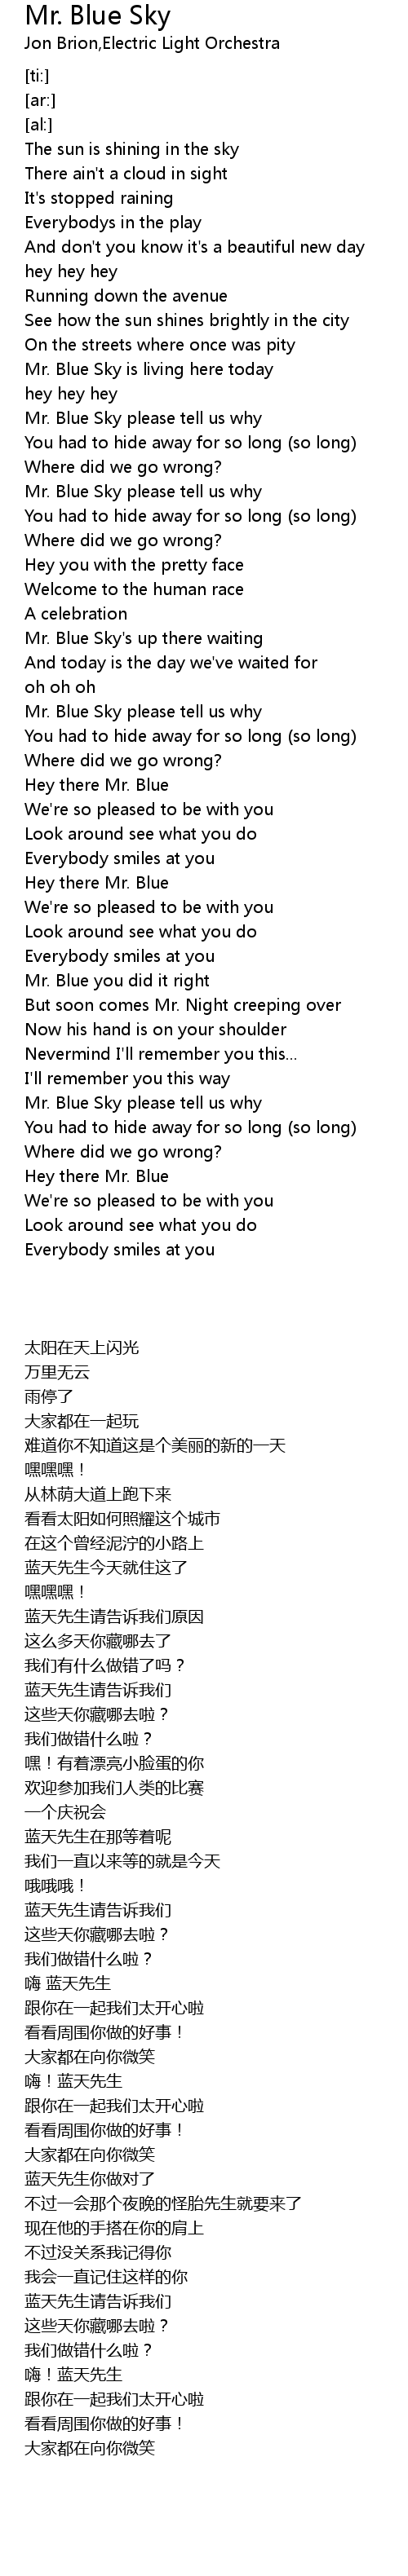 Mr Blue Sky Lyrics Follow Lyrics